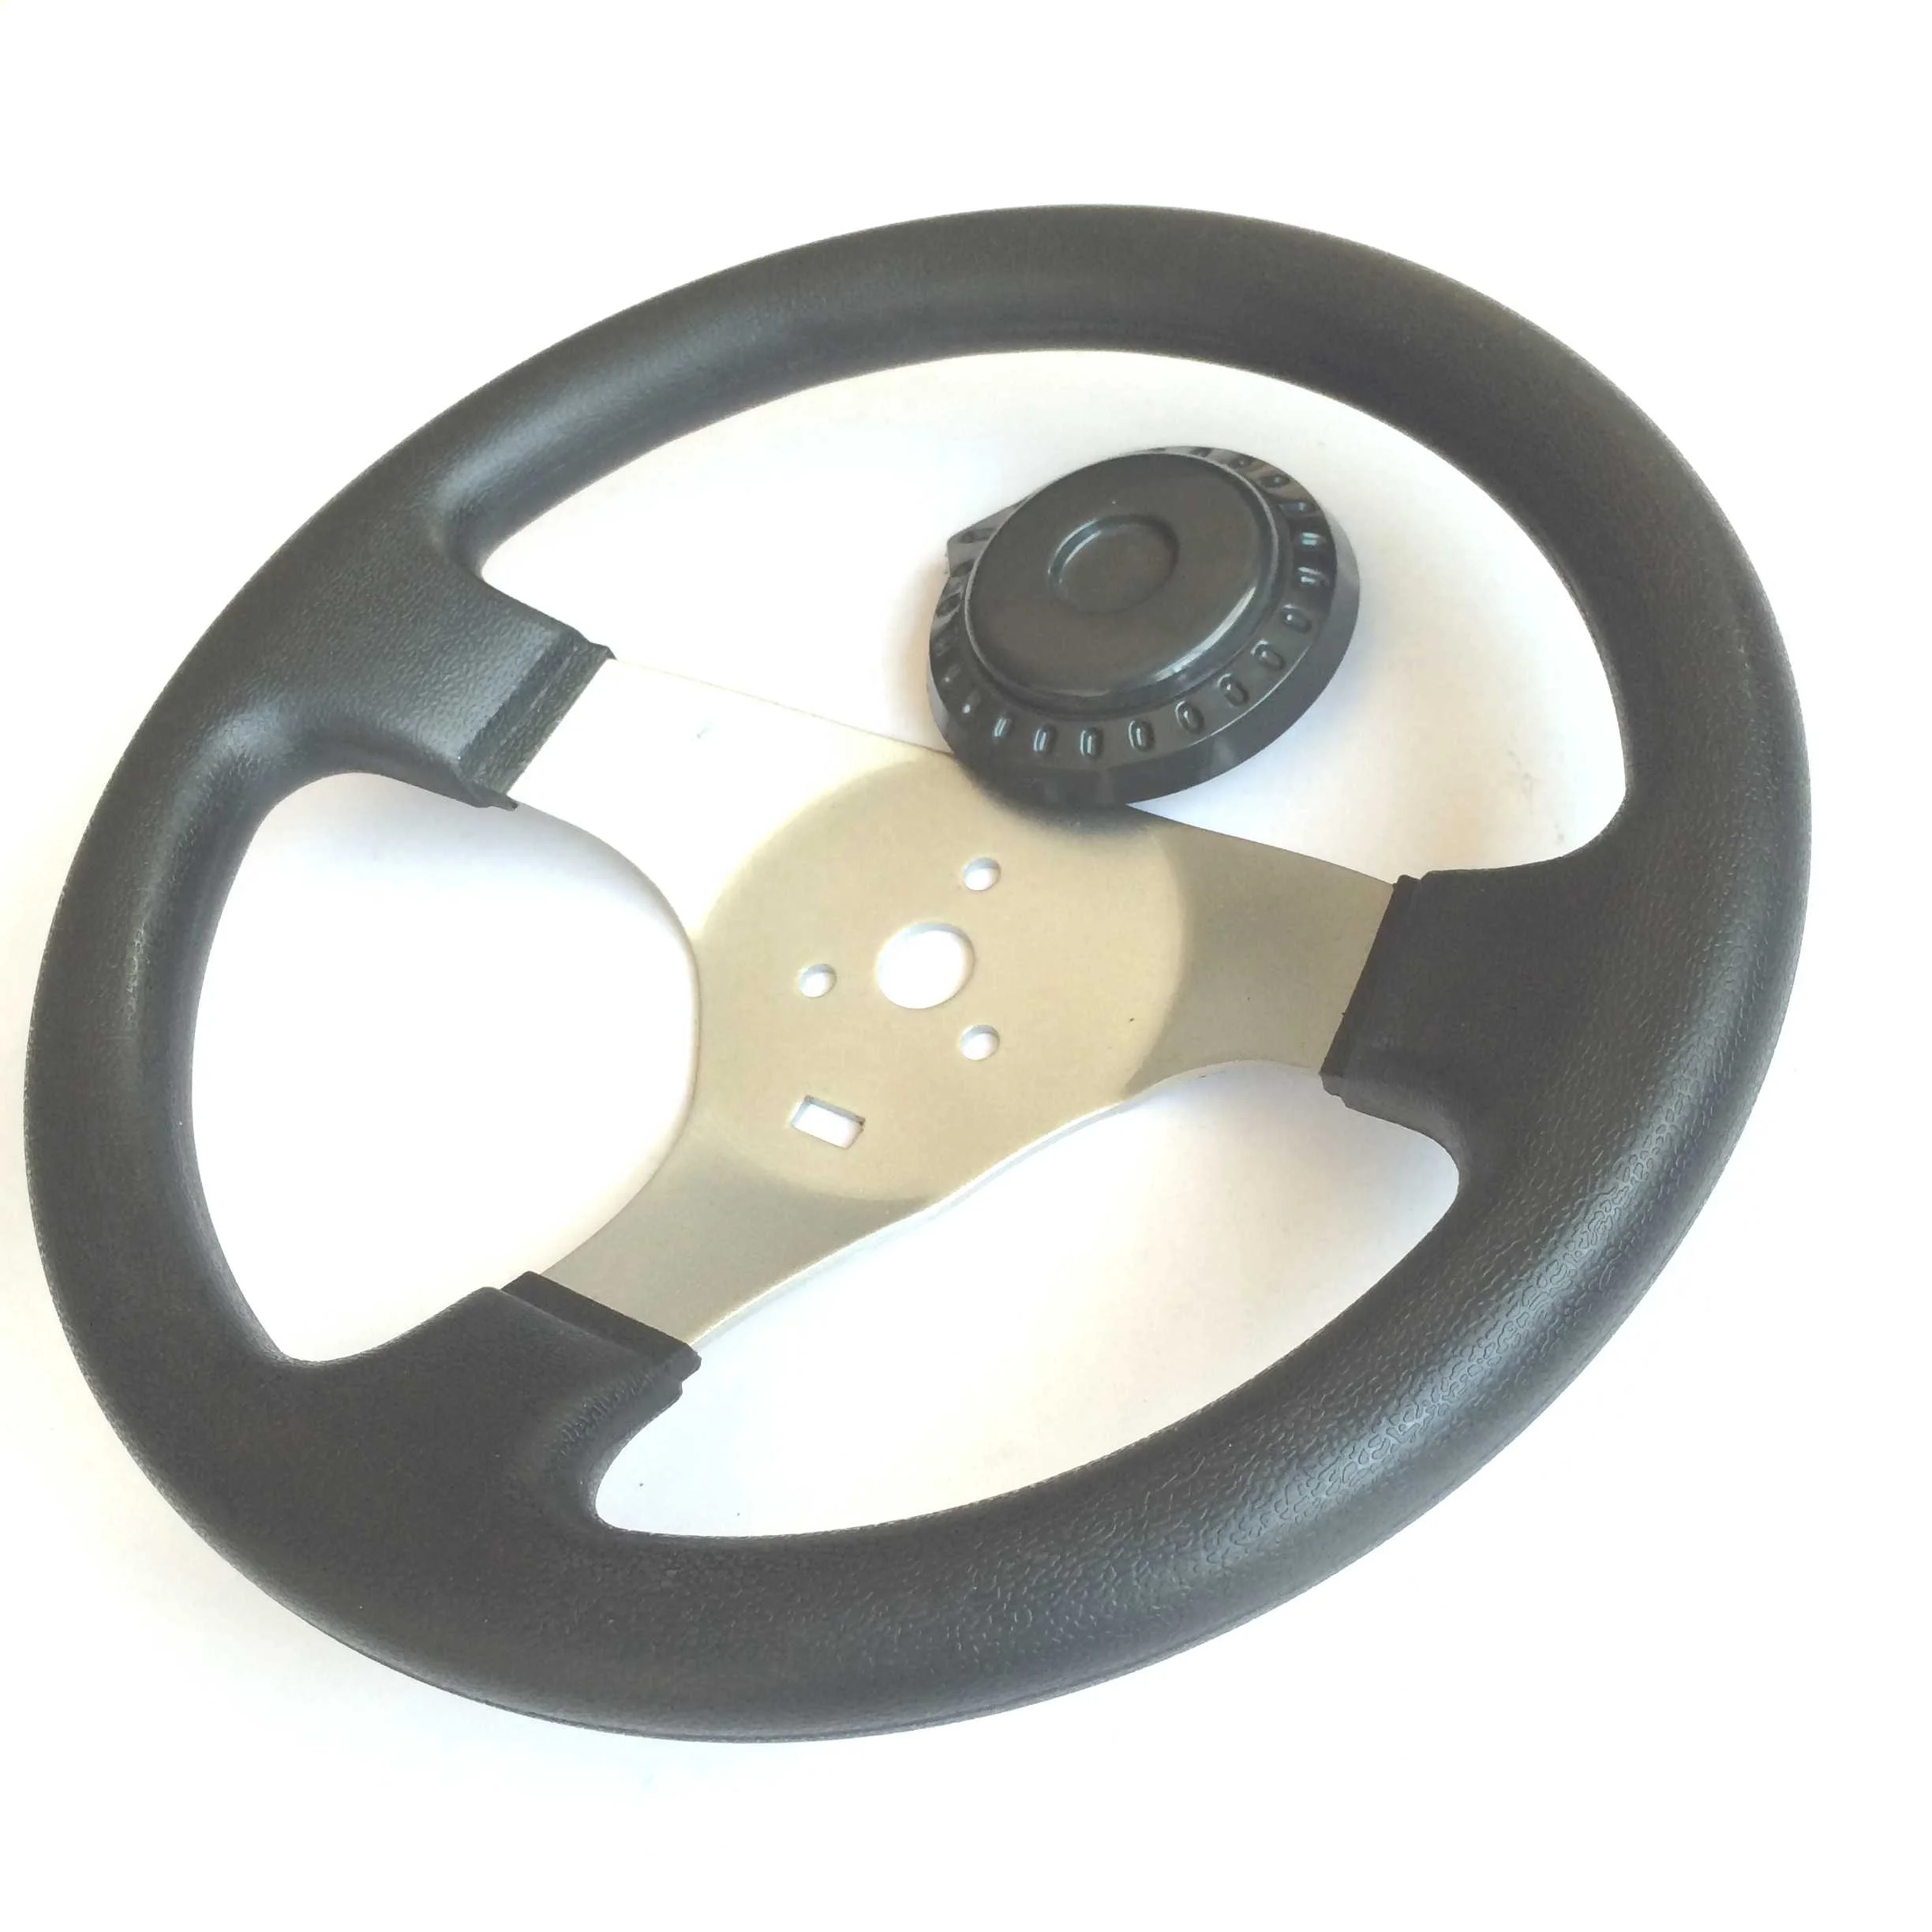 AOOCEEPAW Classic Steering Wheel for 150 250cc Go Kart Buggy Quad Hammerhead Kandi JCL Size:1